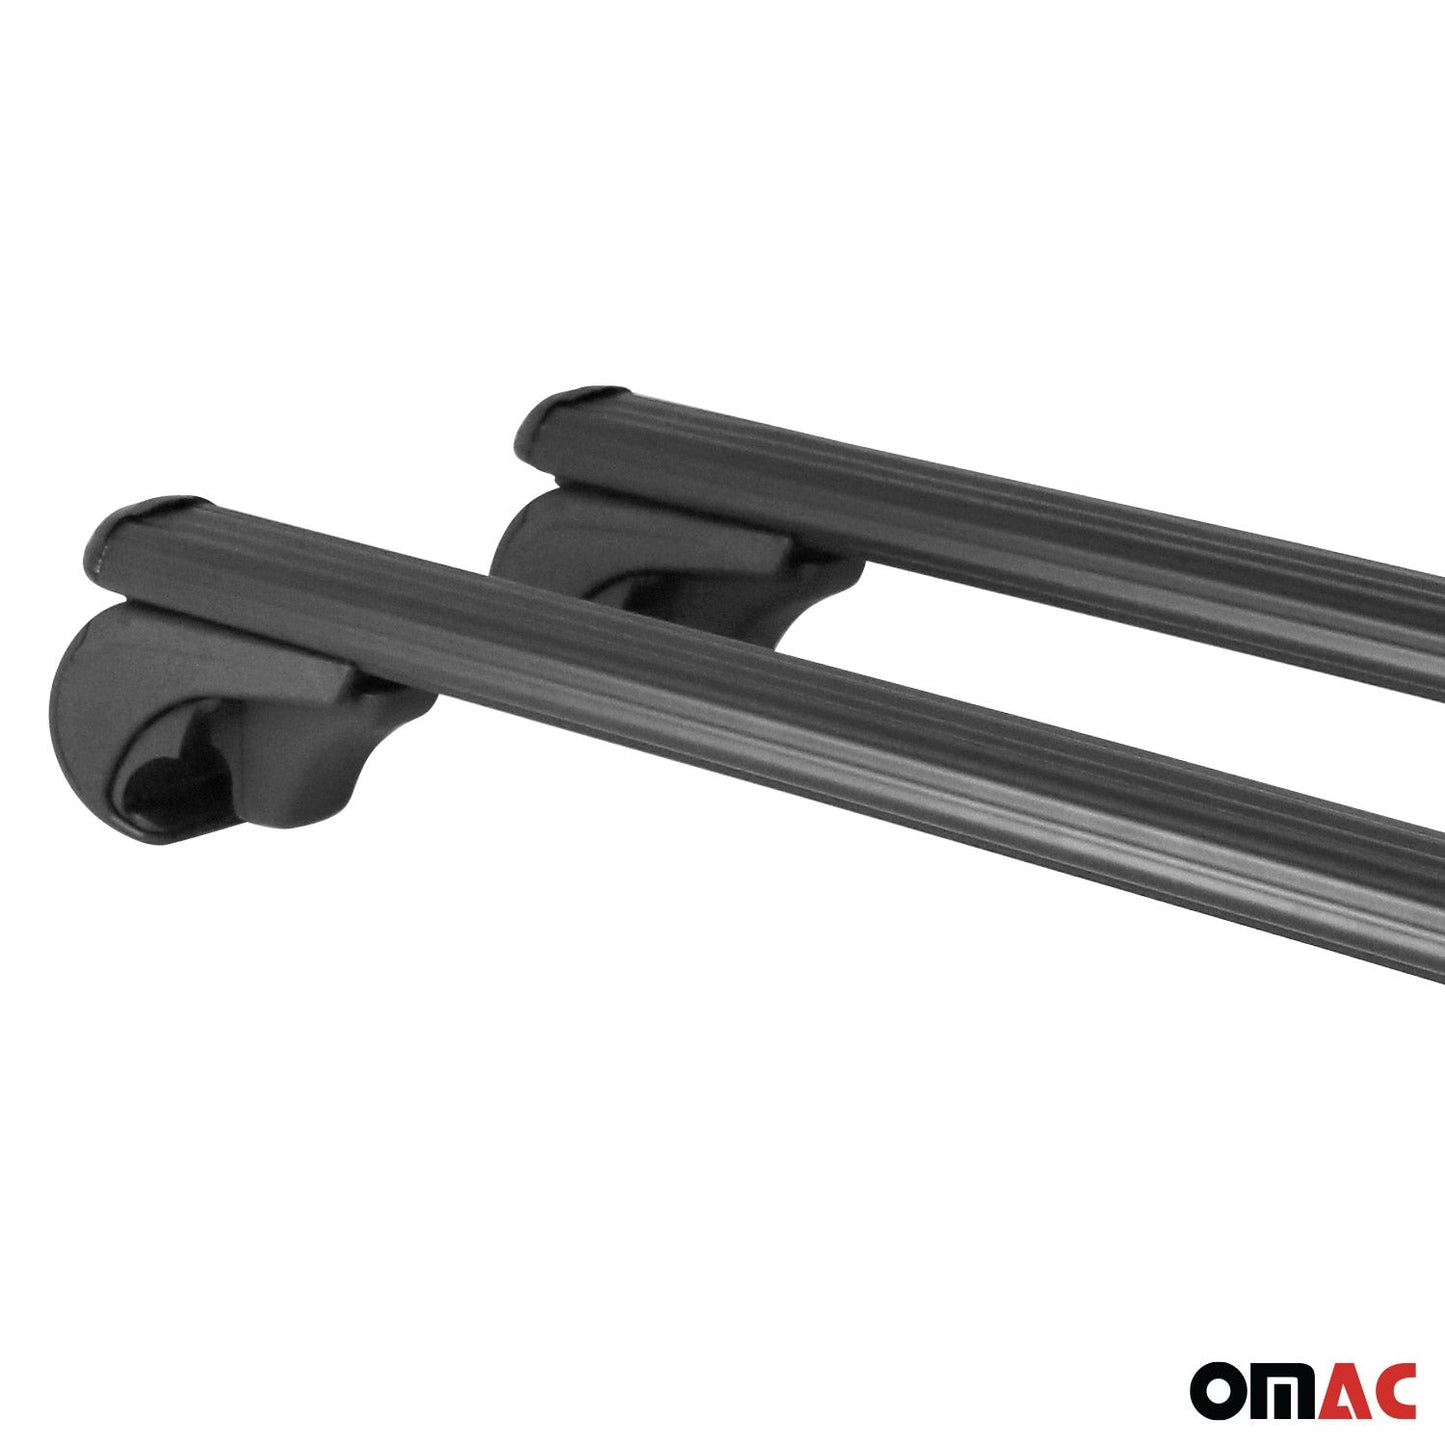 OMAC Lockable Roof Rack Cross Bars Carrier for Chevrolet Uplander 2005-2009 Black 16139696929MB